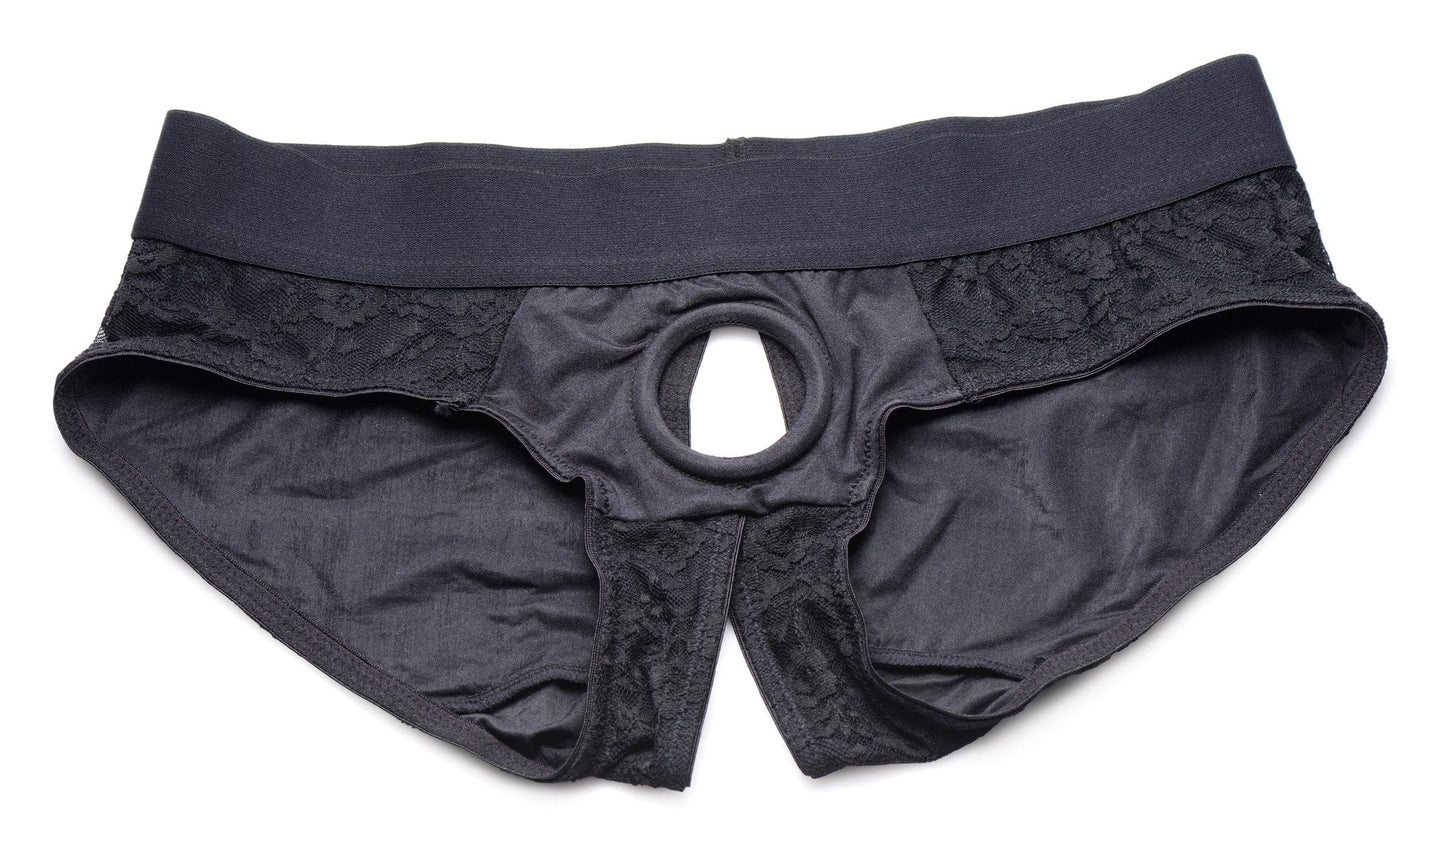 lace envy crotchless panty harness 2xl black